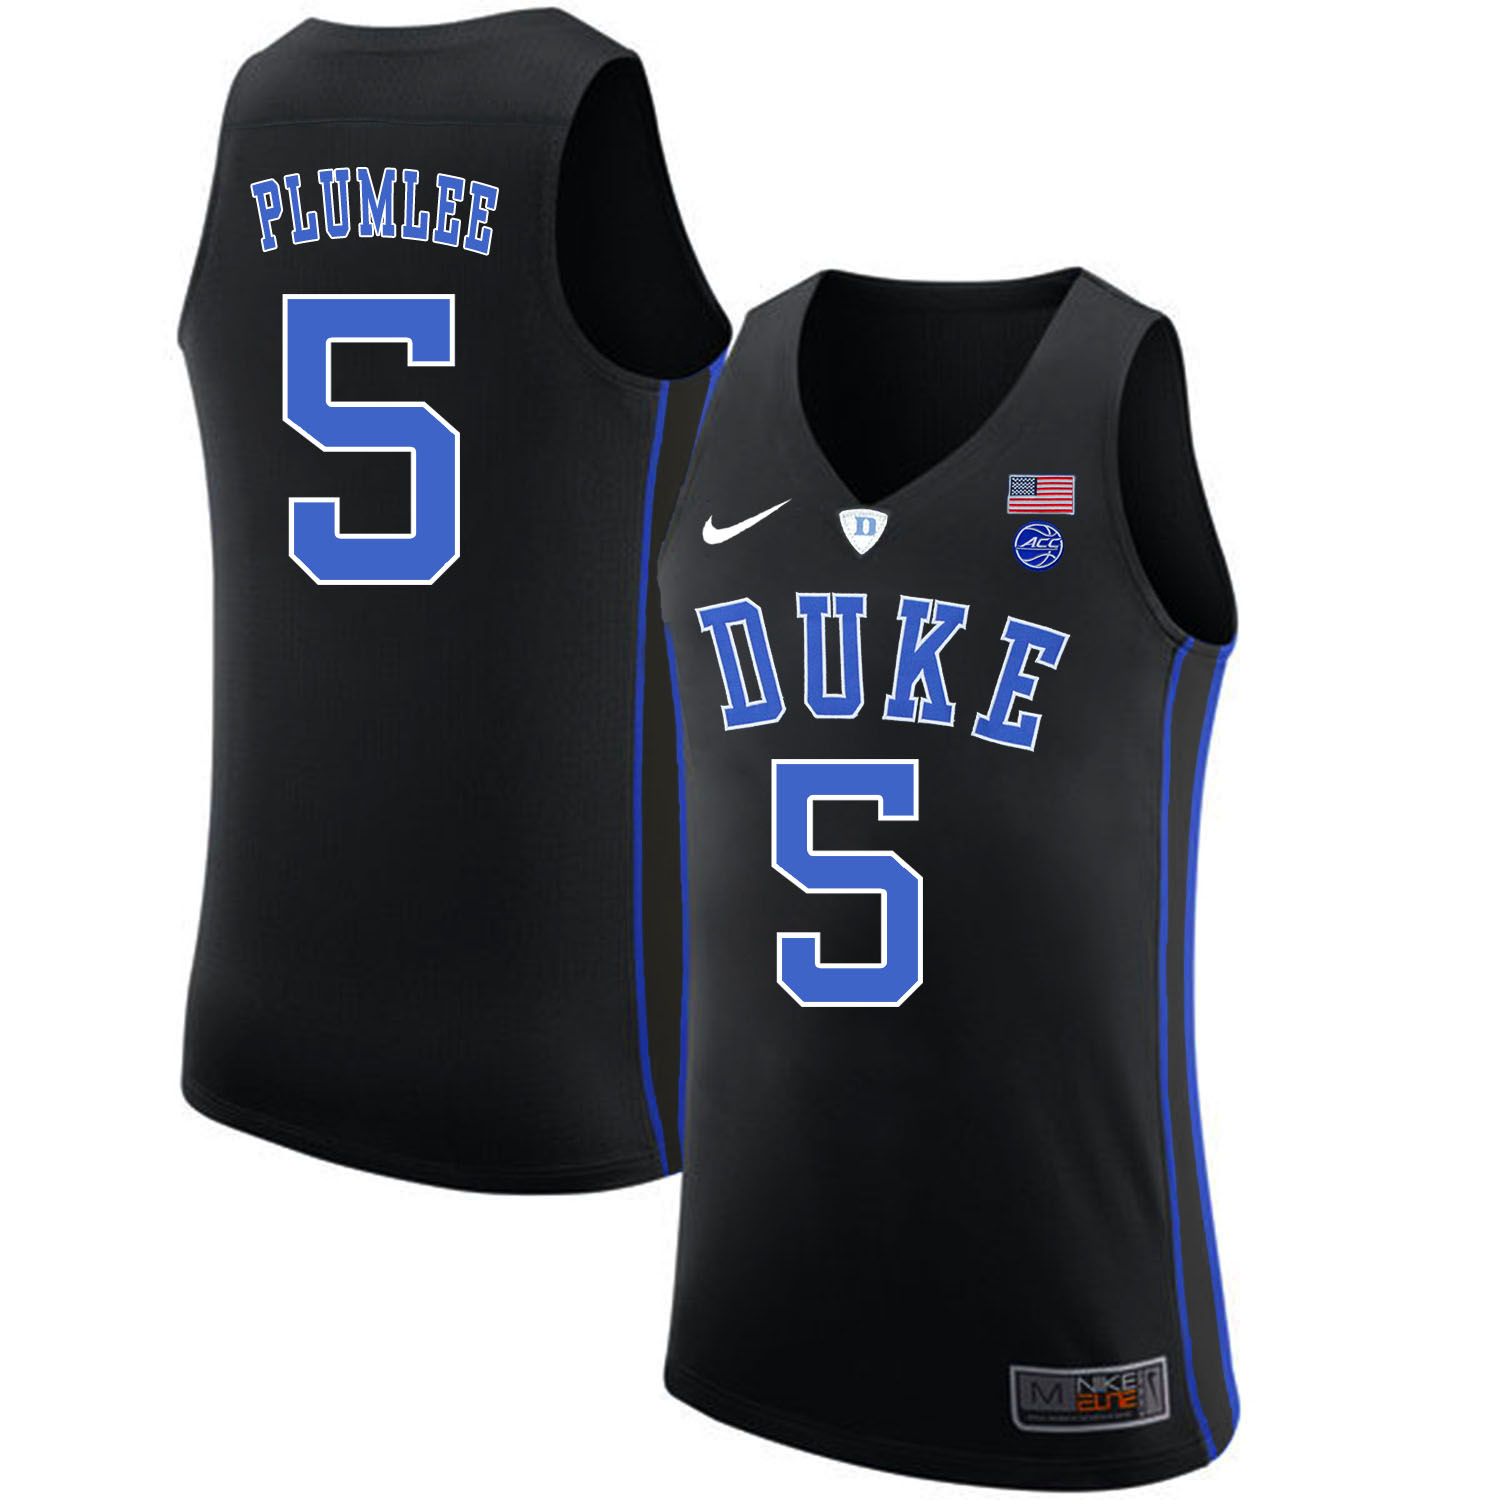 Duke Blue Devils 5 Mason Plumlee Black Nike College Basketball Jersey